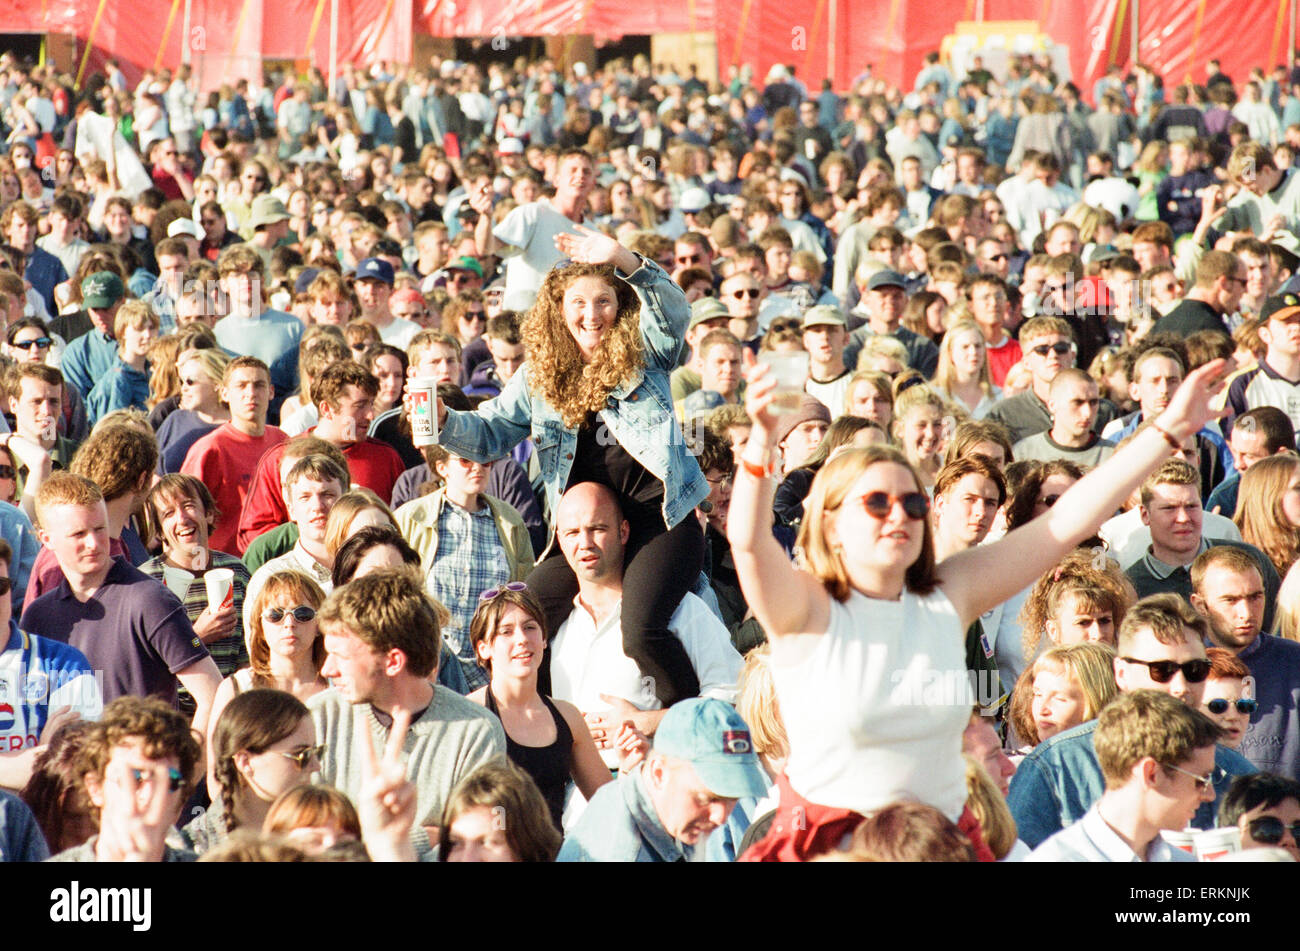 T in the Park Music Festival, Strathclyde Park, Lanarkshire, Schottland, 13. Juli 1996. Stockfoto